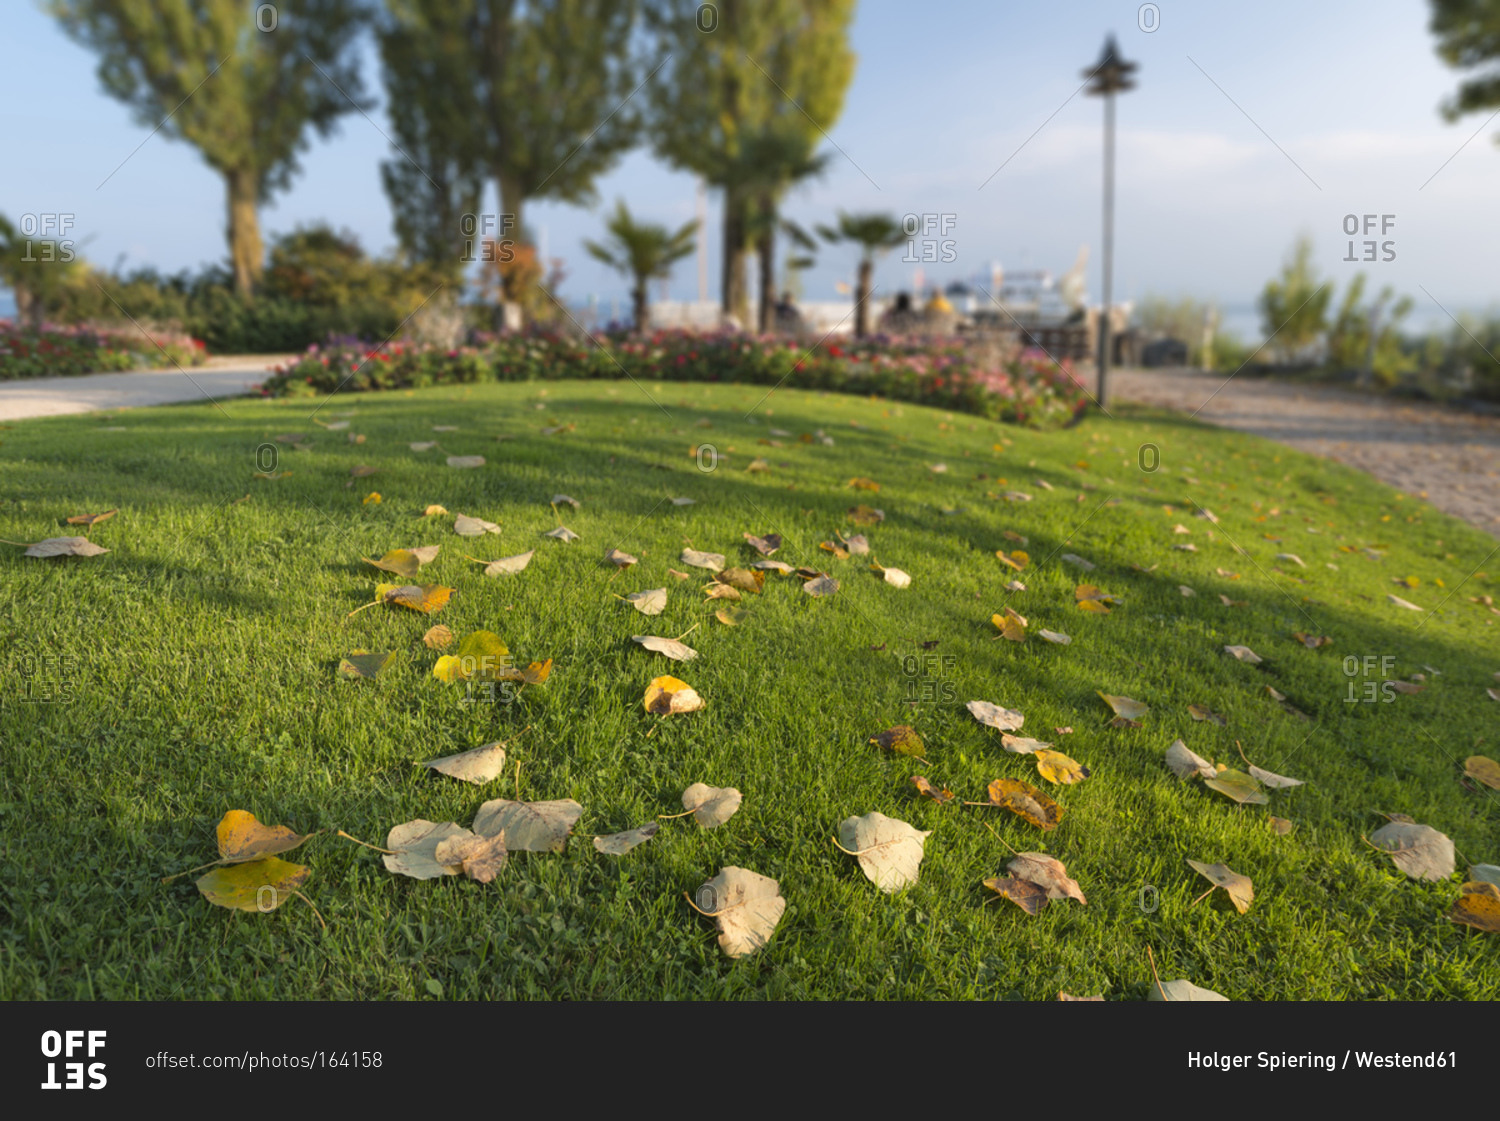 Autumn leaves at lakeside promenade stock photo -
OFFSET